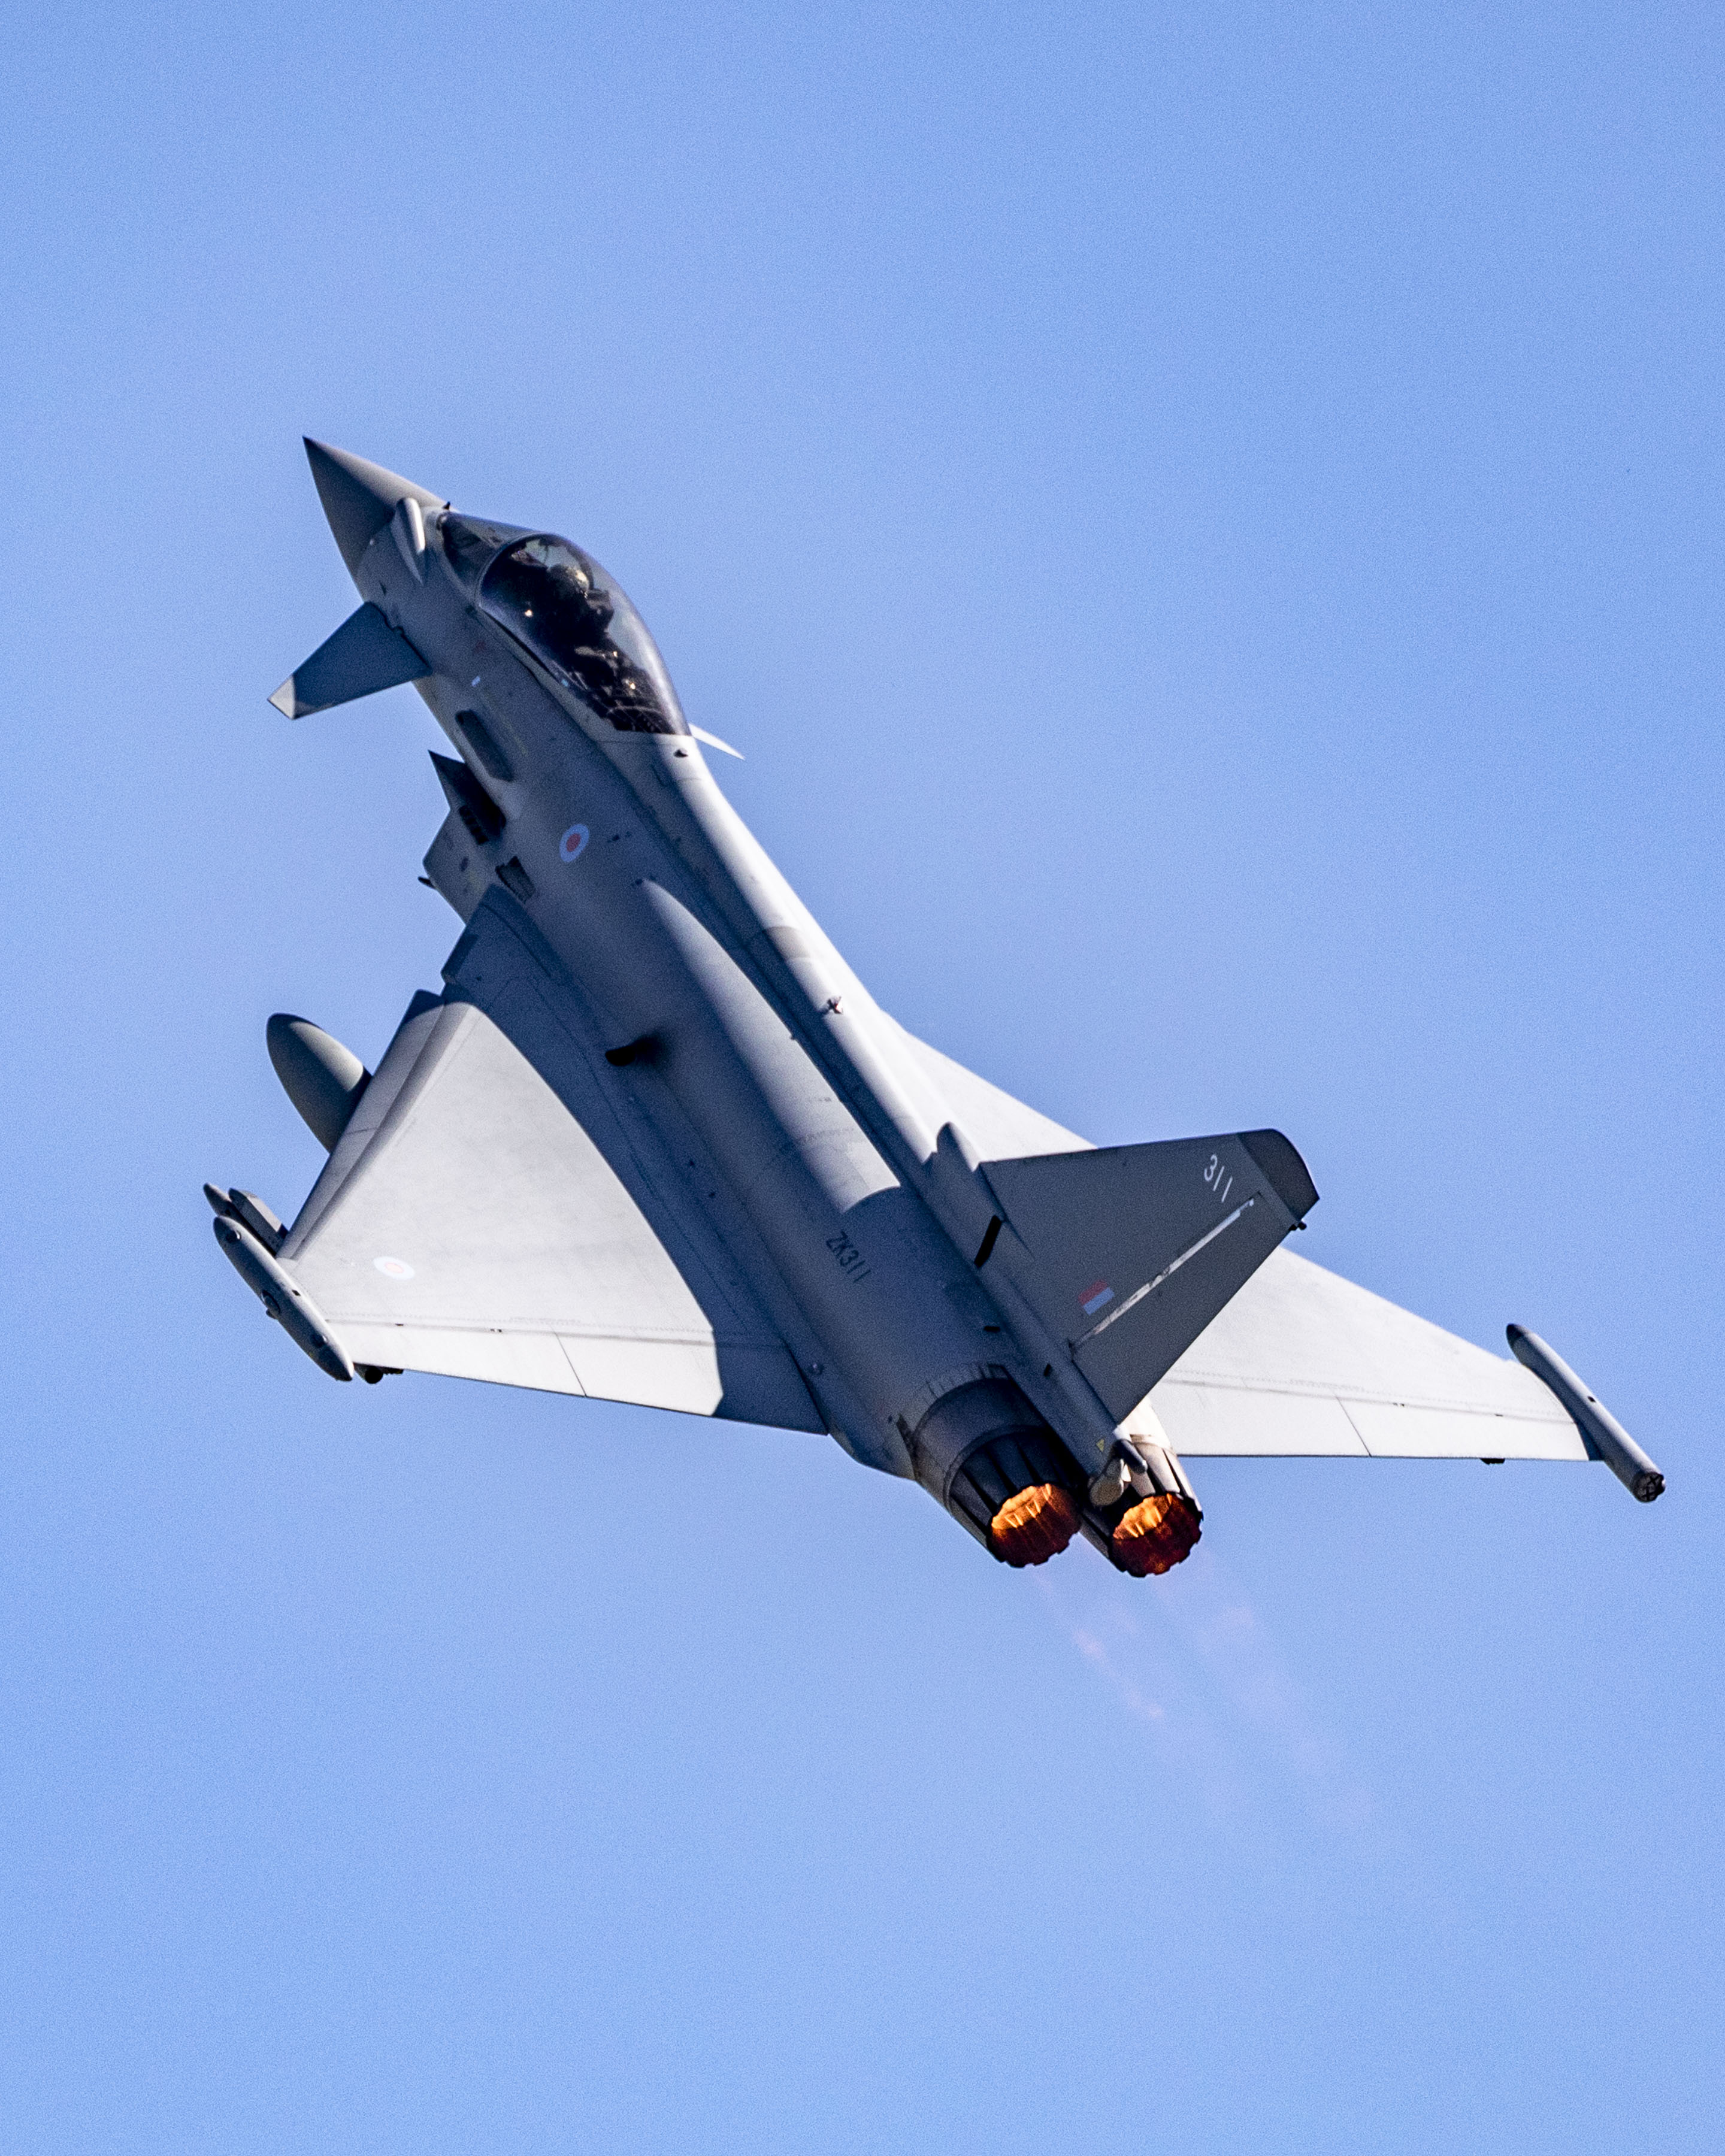 RAF Typhoon in flight pointing upwards.